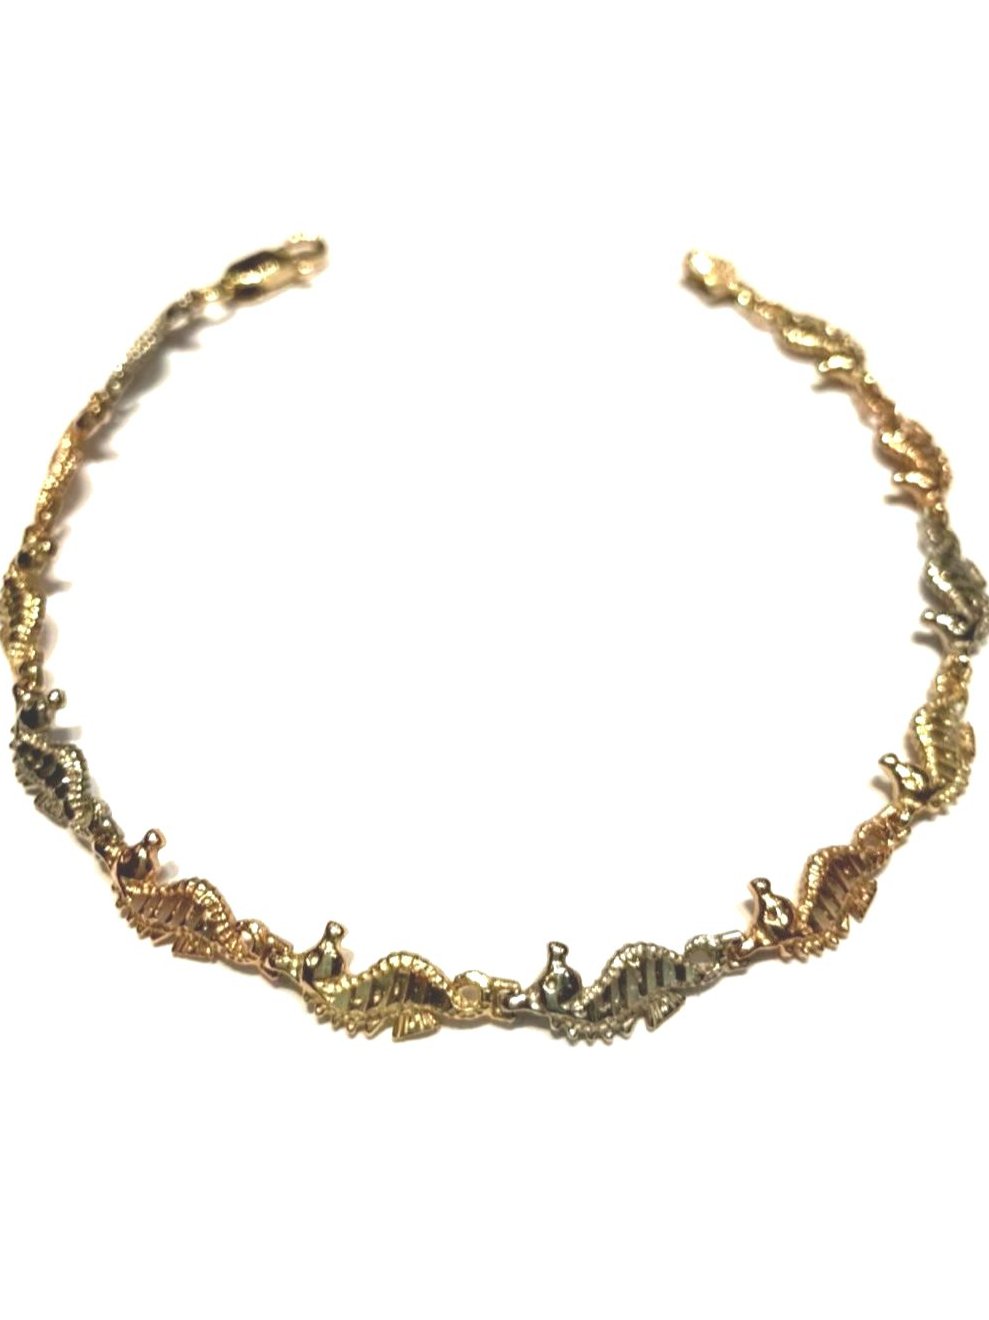 Gold seahorse shape bracelet  7.5inch